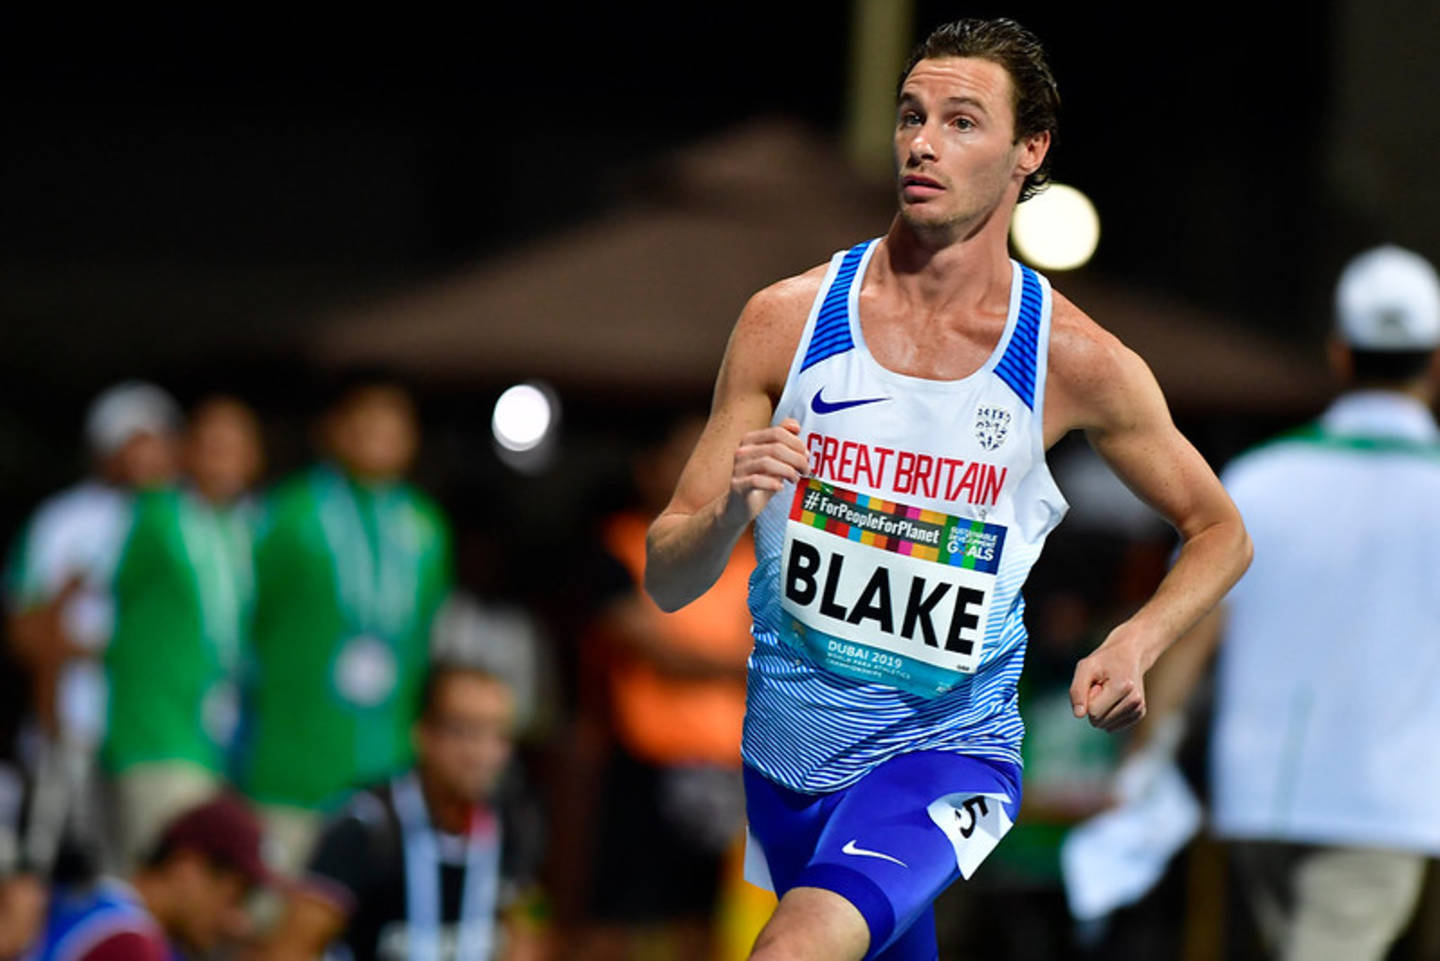 Paul Blake, GB para athlete competing at World Para Athletics Championships 2019 in Dubai